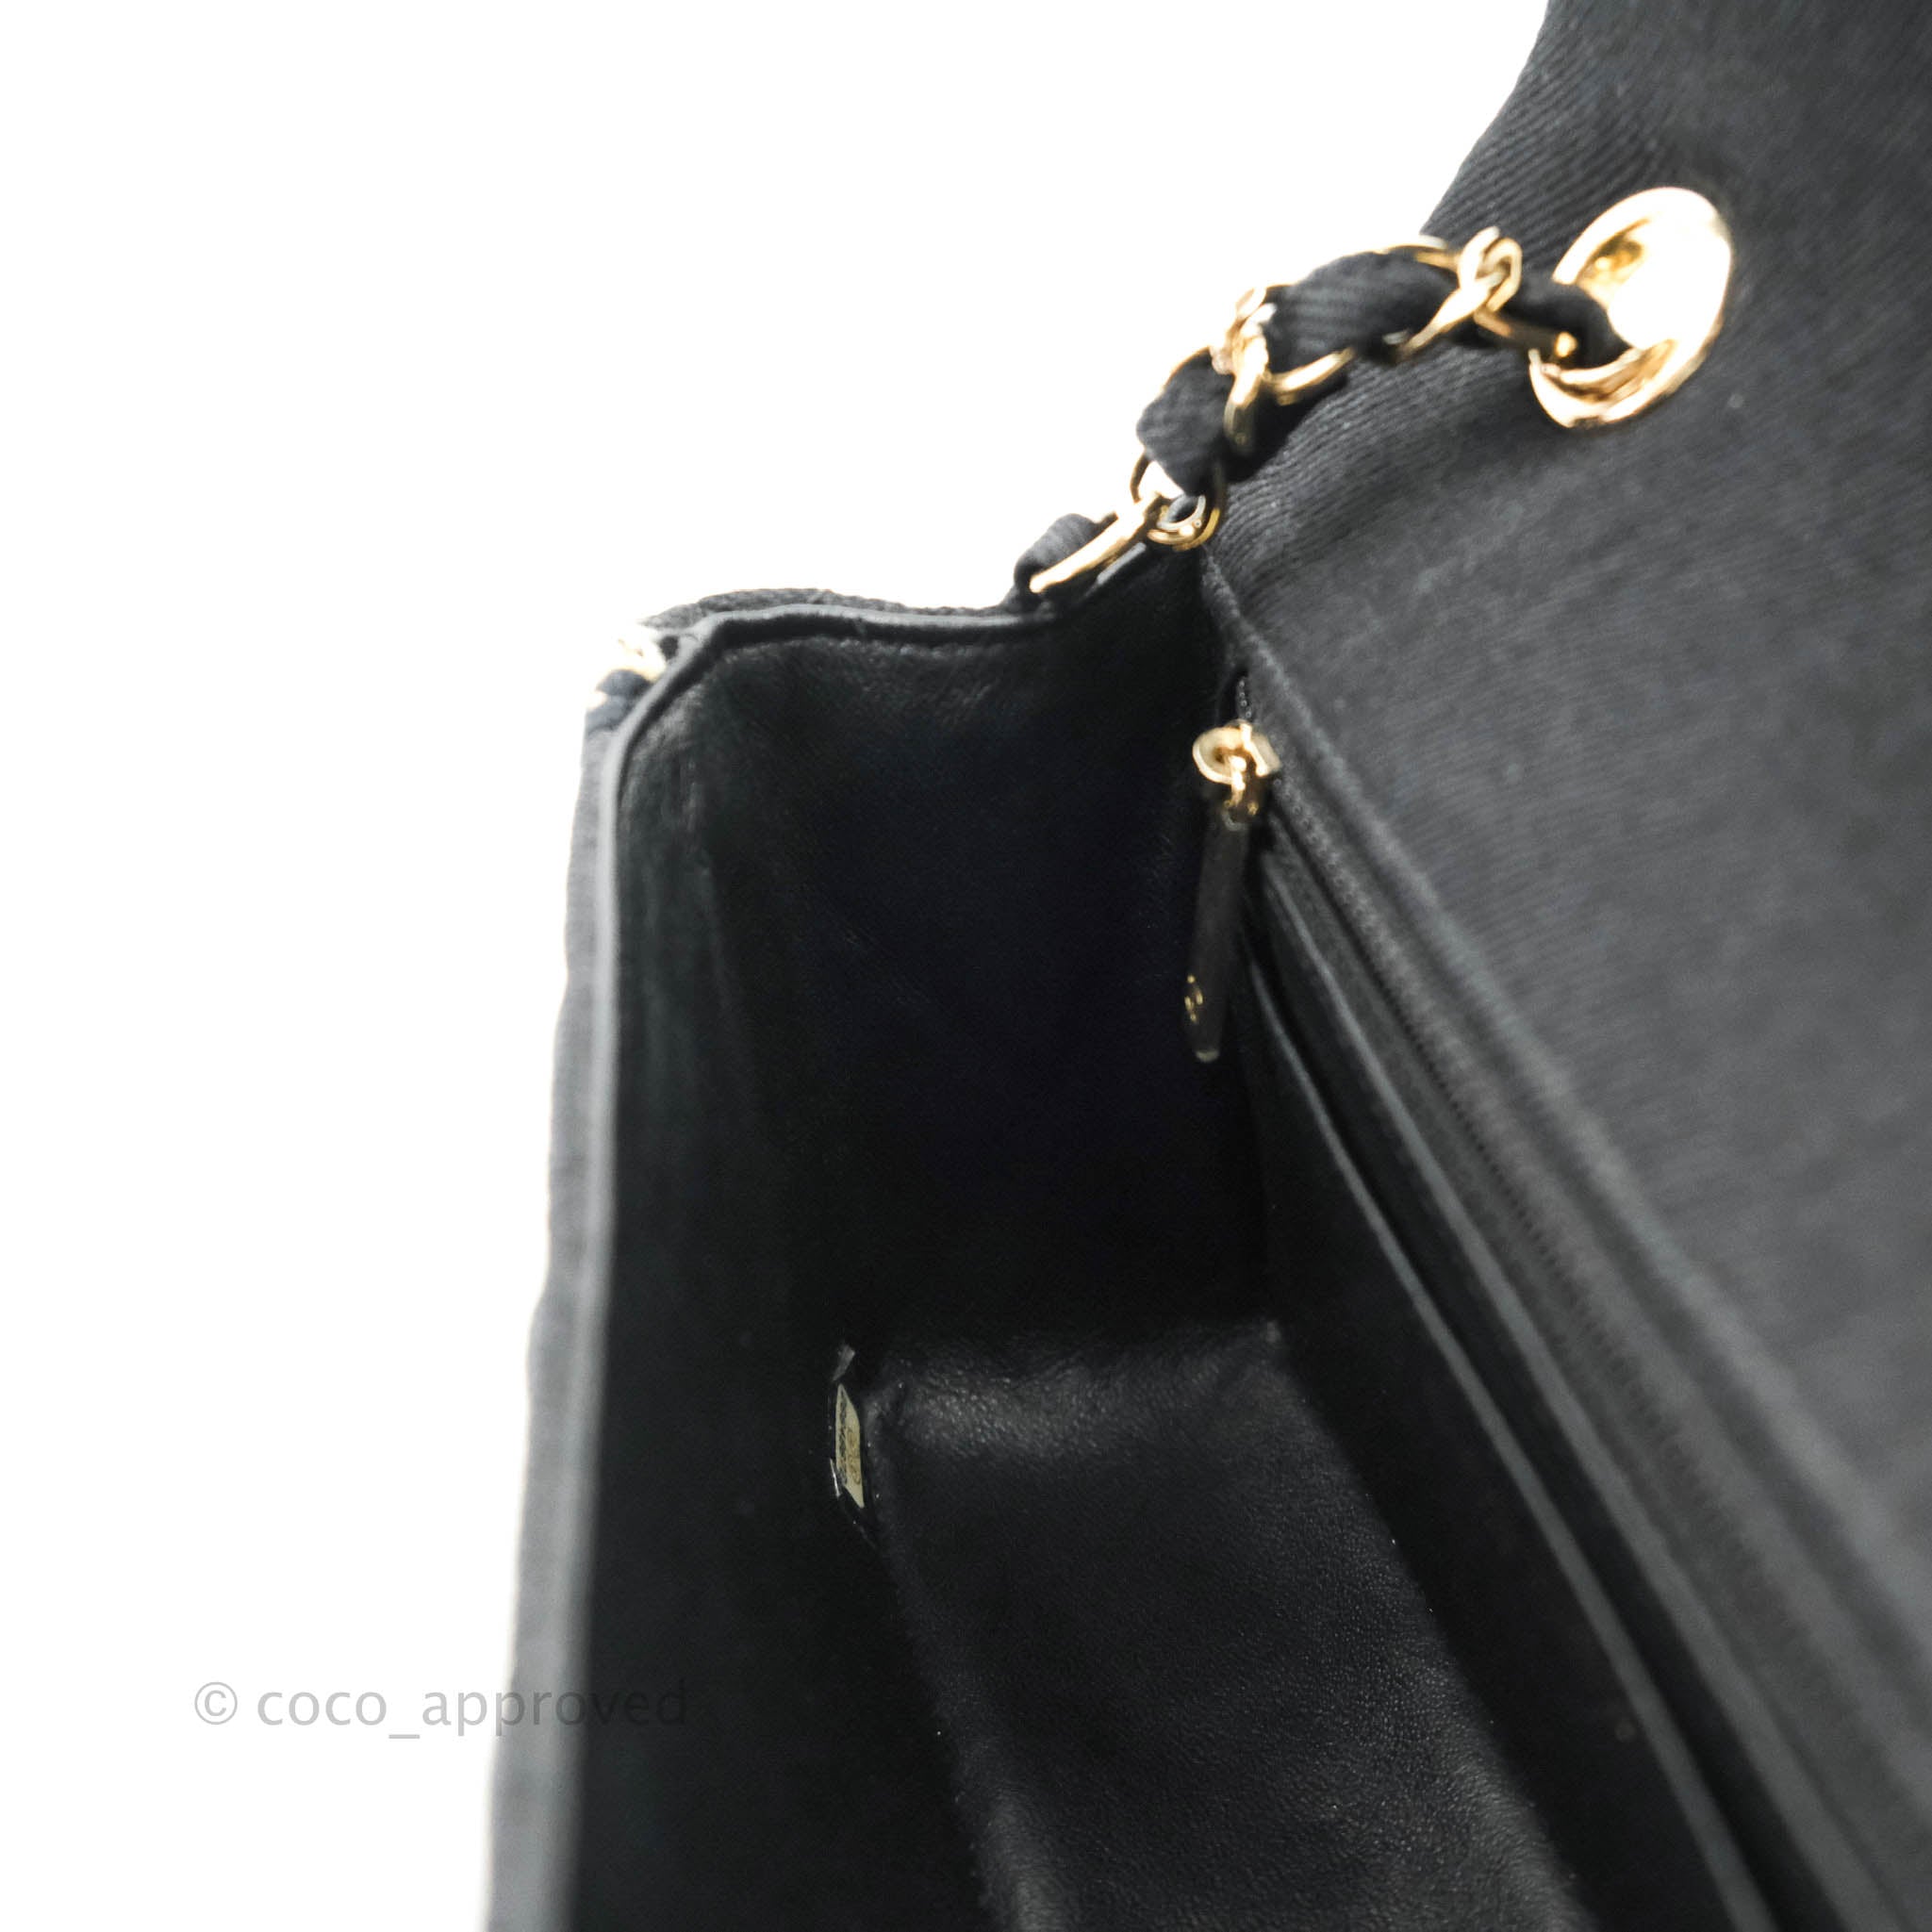 chanel flap bag inside zipper